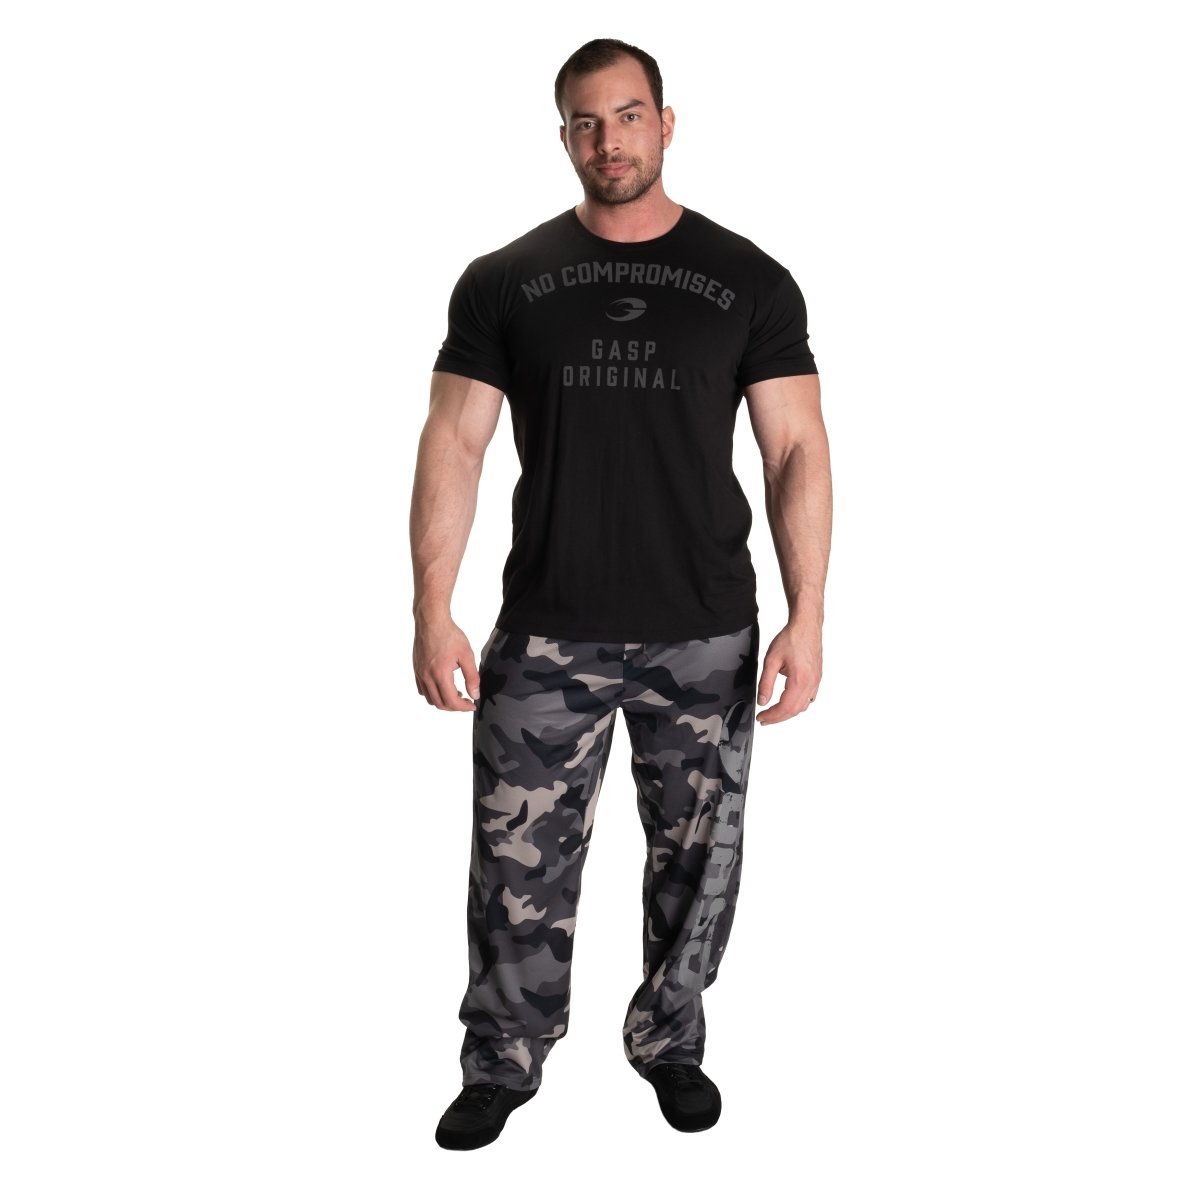 GASP Original Mesh Pants - Tactical Camo - Urban Gym Wear